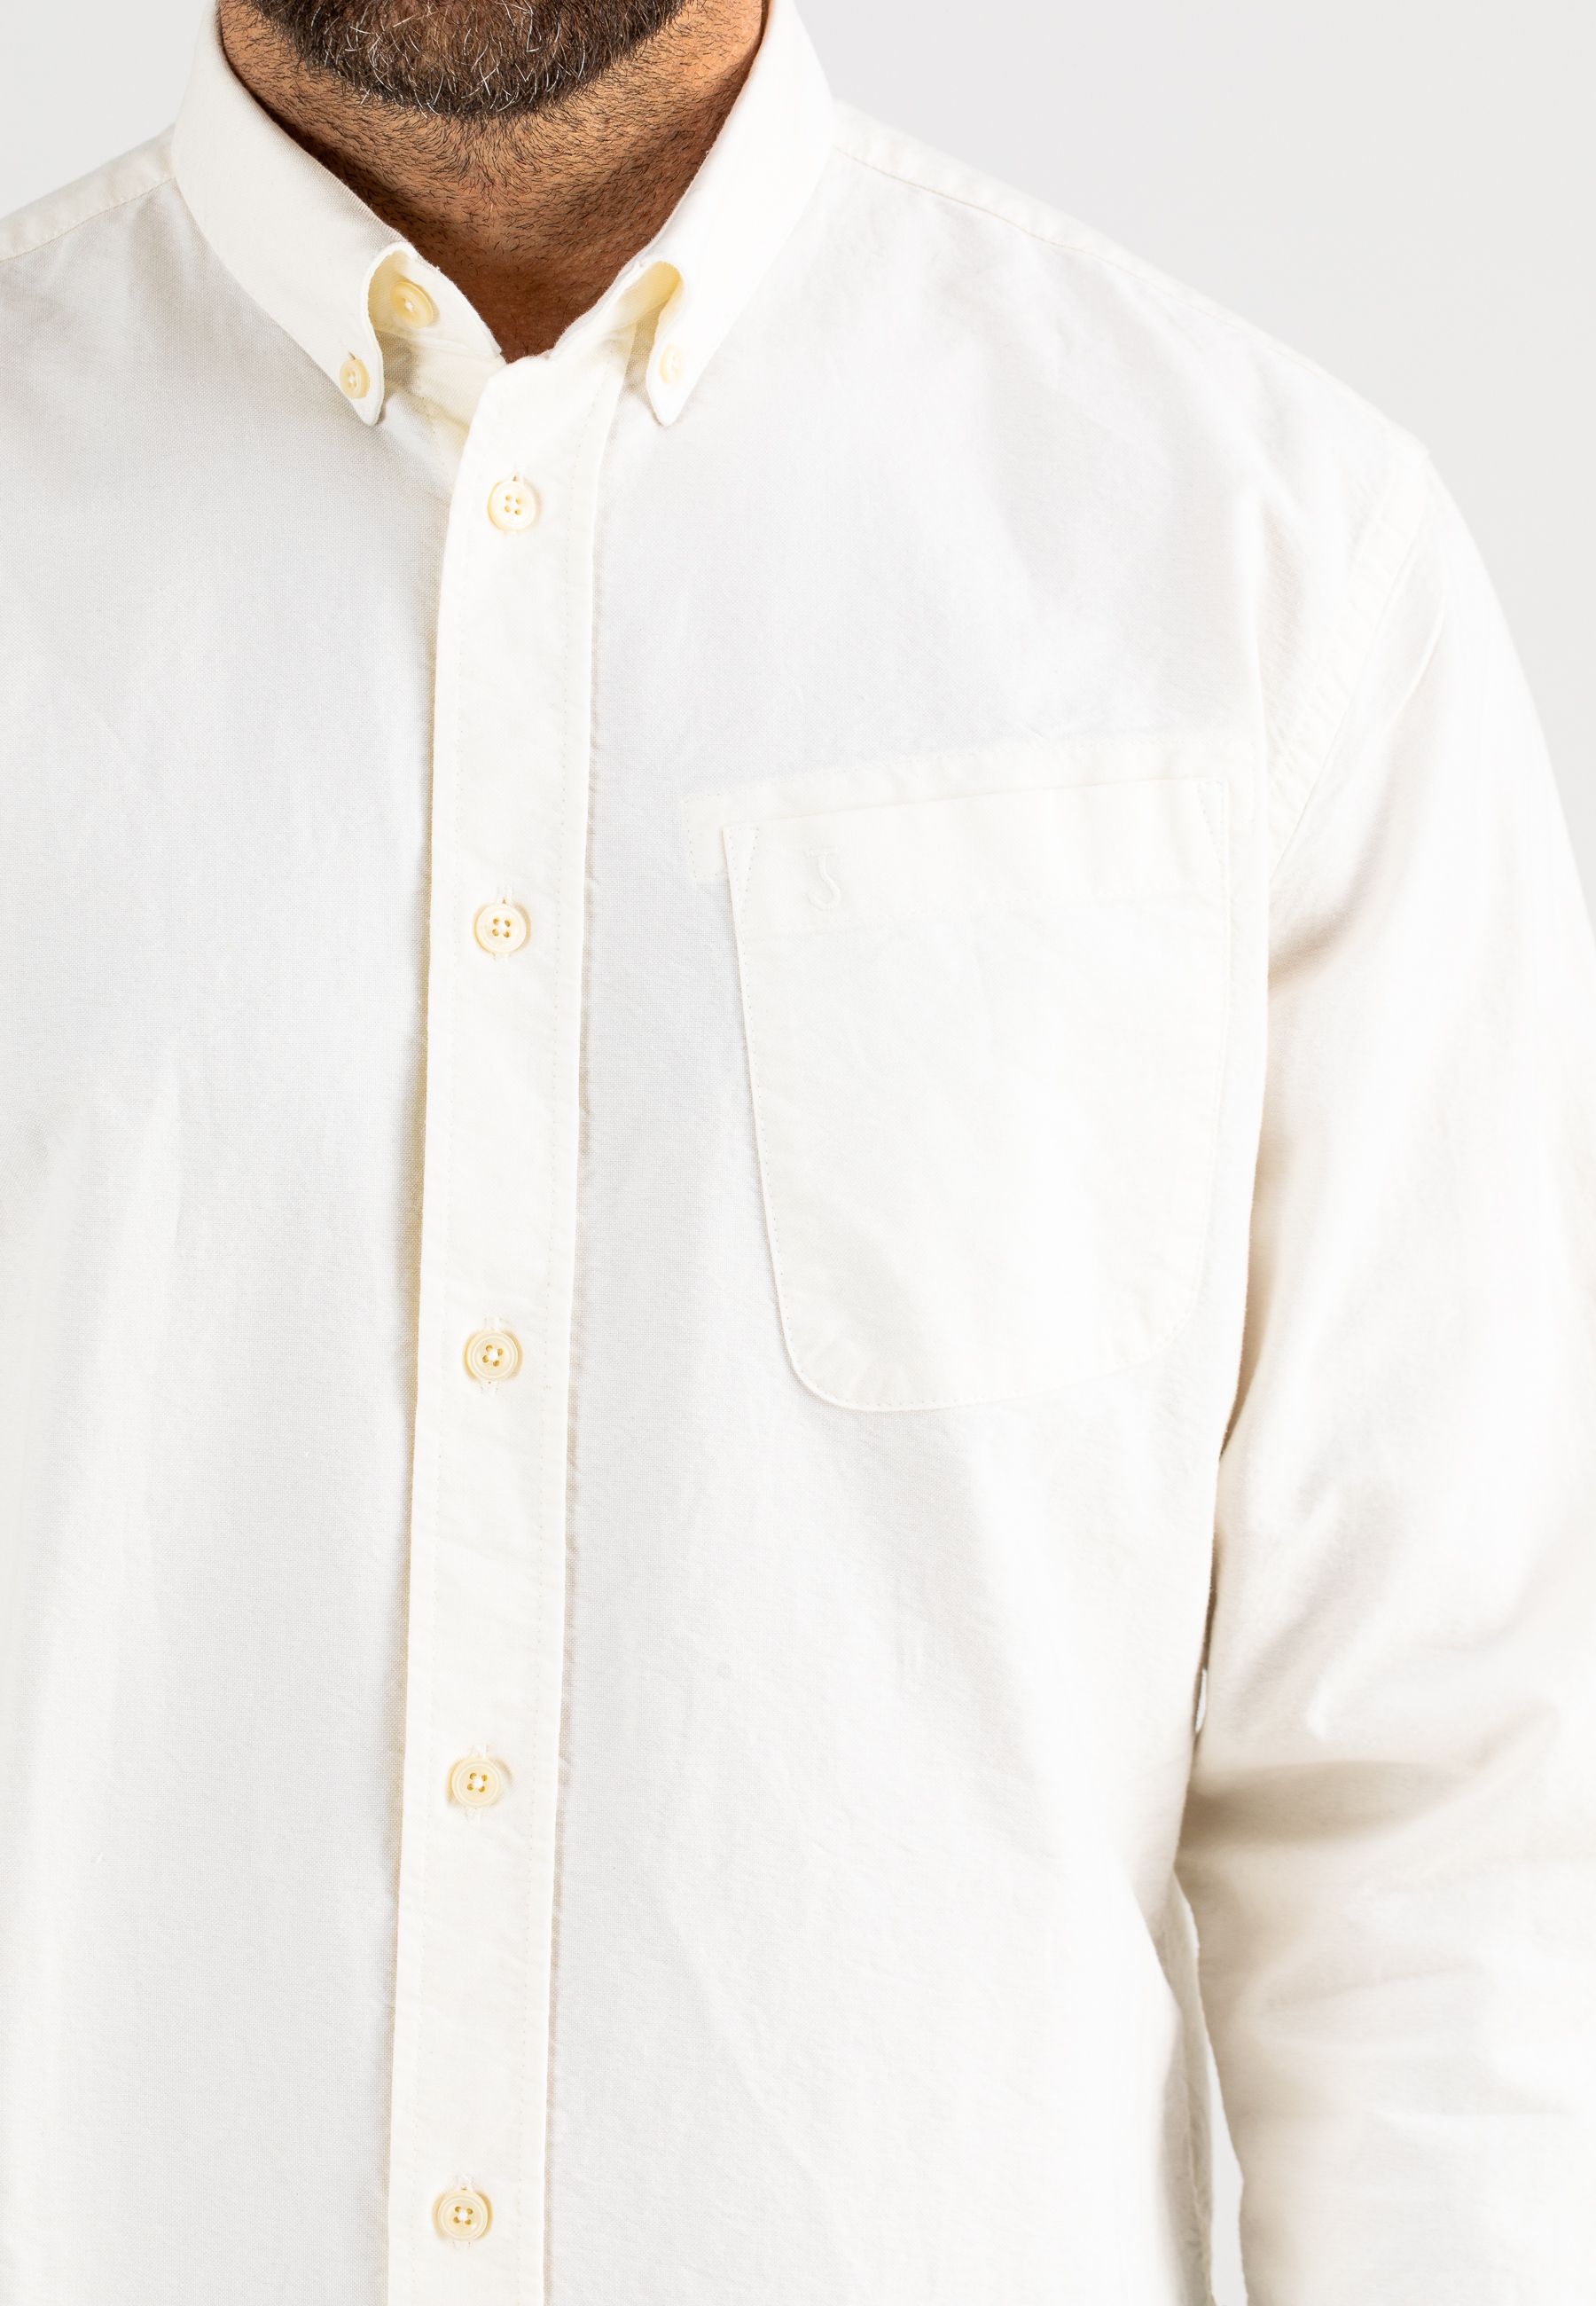 Aidan Cotton Oxford Shirt